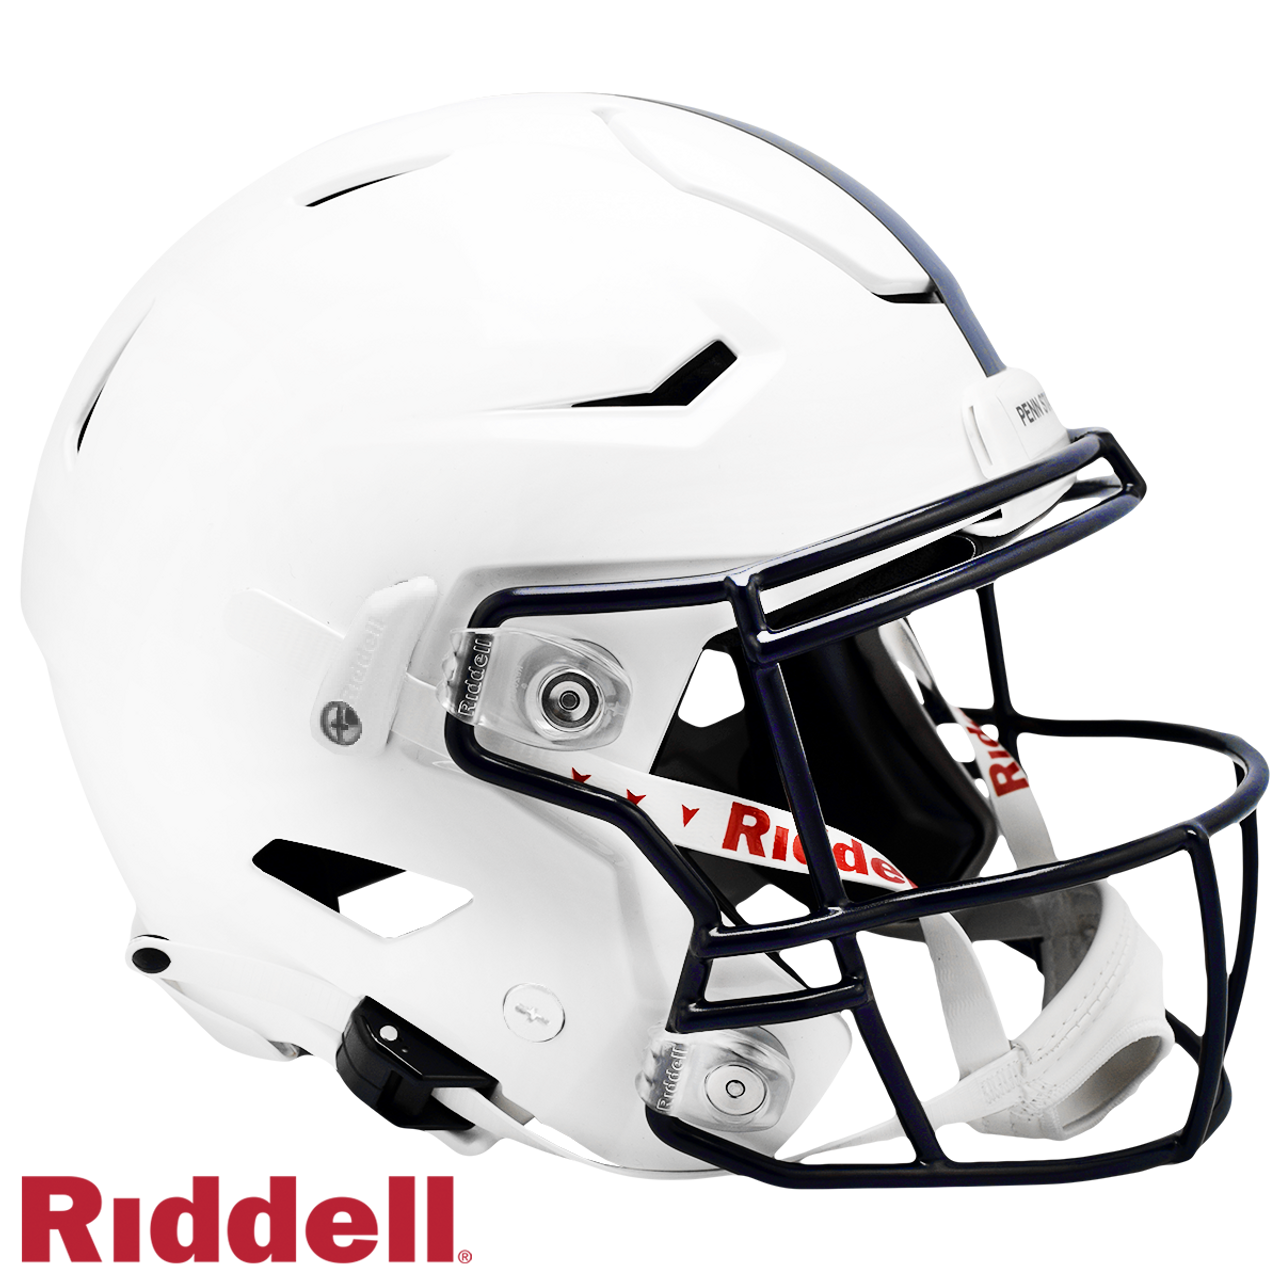 Riddell Louisville Cardinals Full-Size Football Helmet